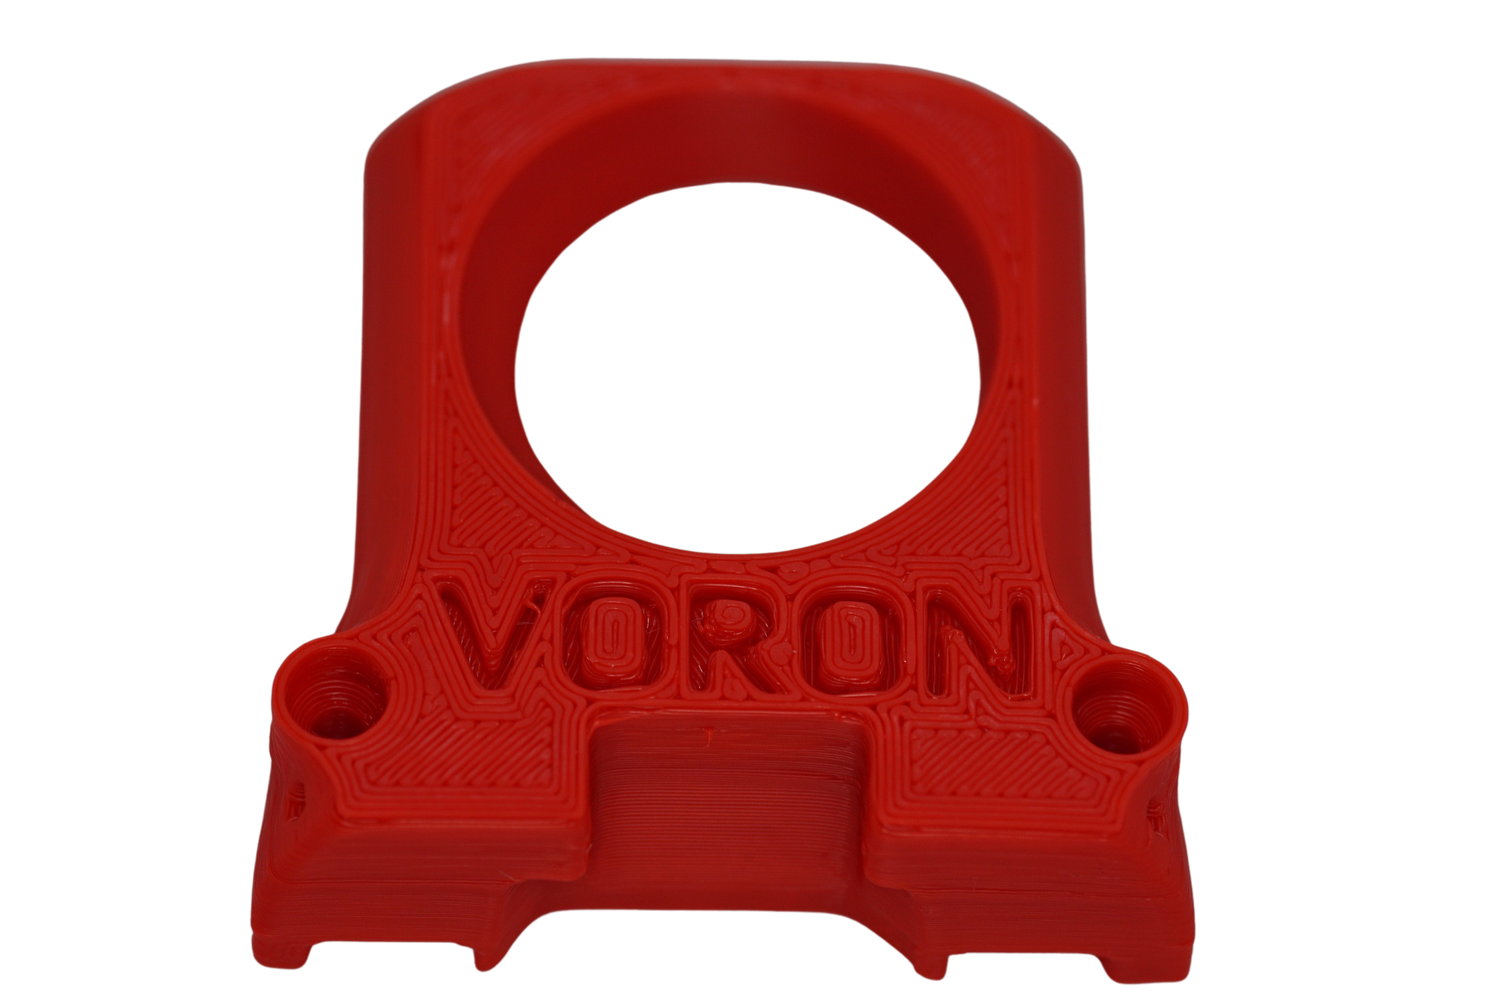 Voron Trident Printed Parts